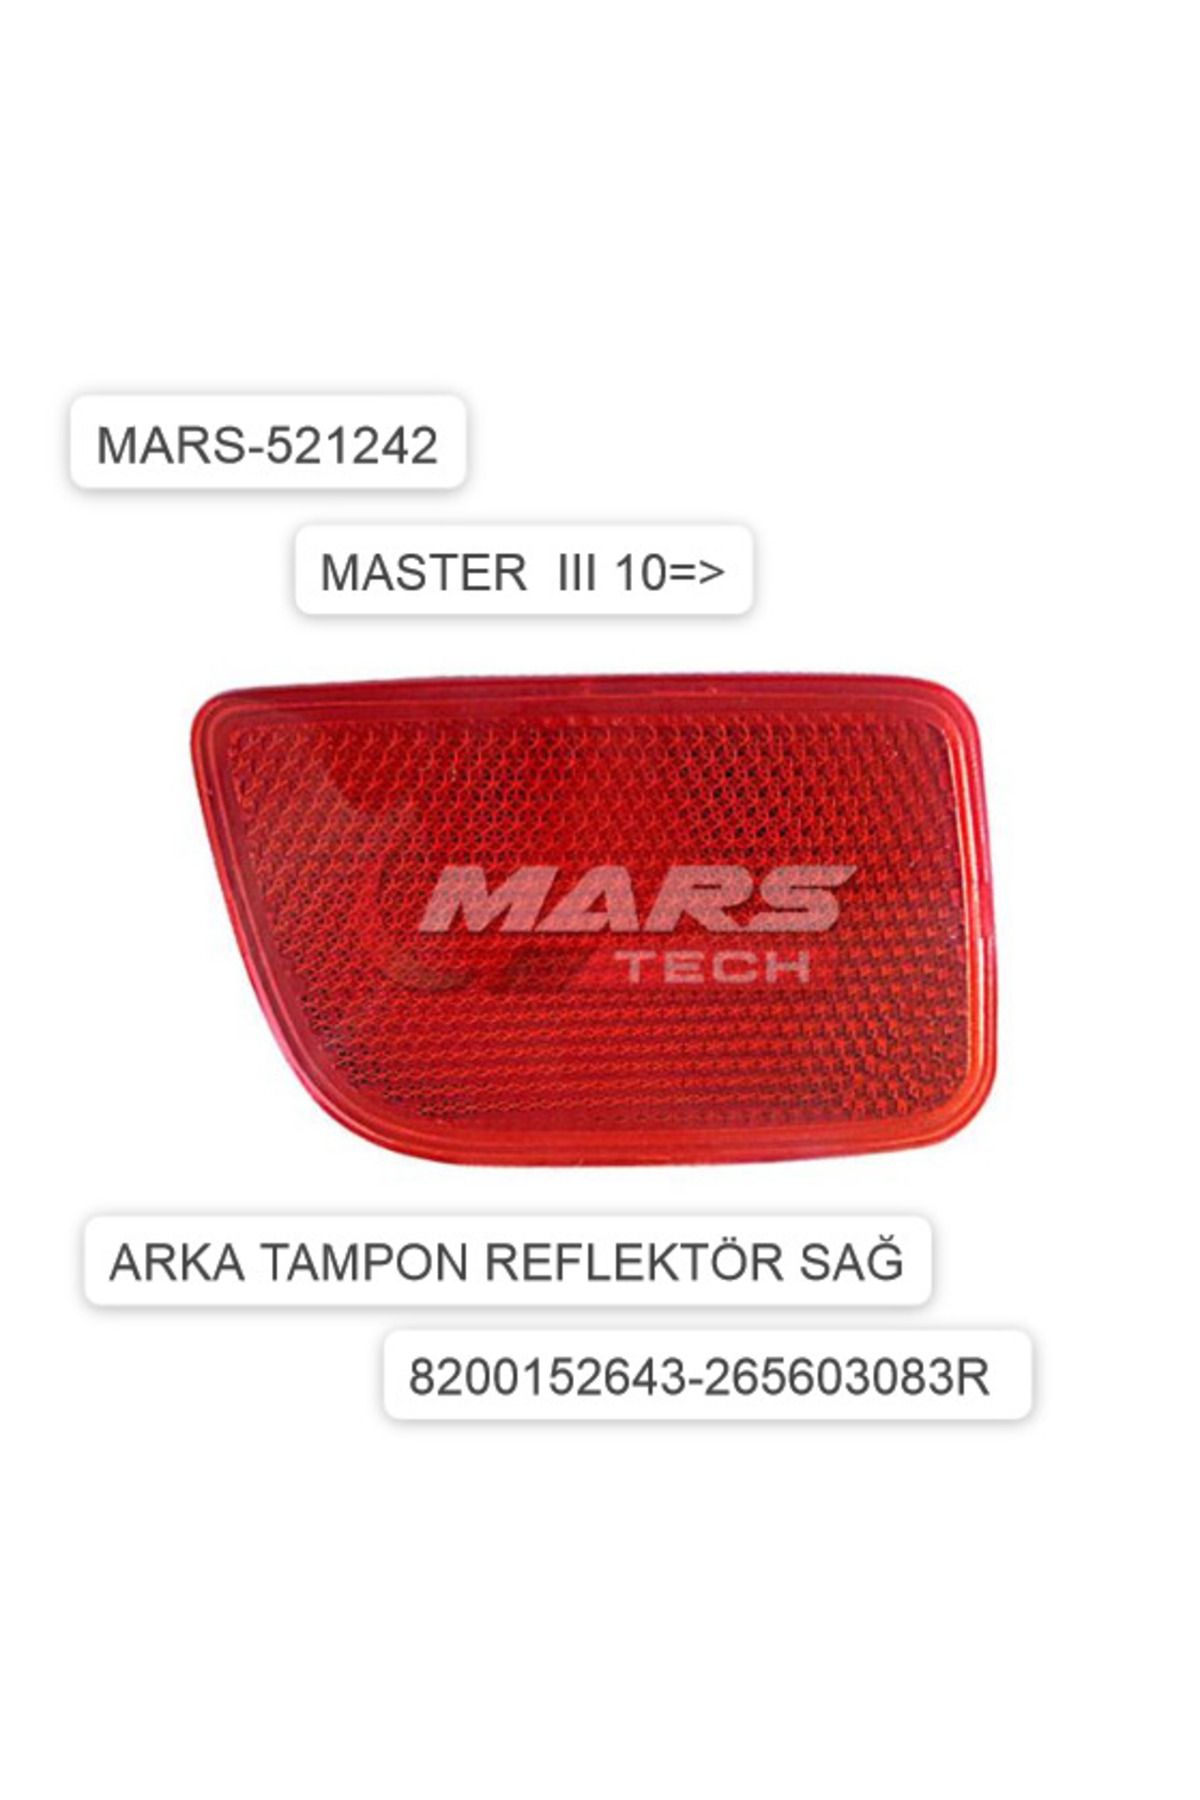 Mars TAMPON REFLEKTÖRÜ ARKA SOL 521242 MASTER III 10->